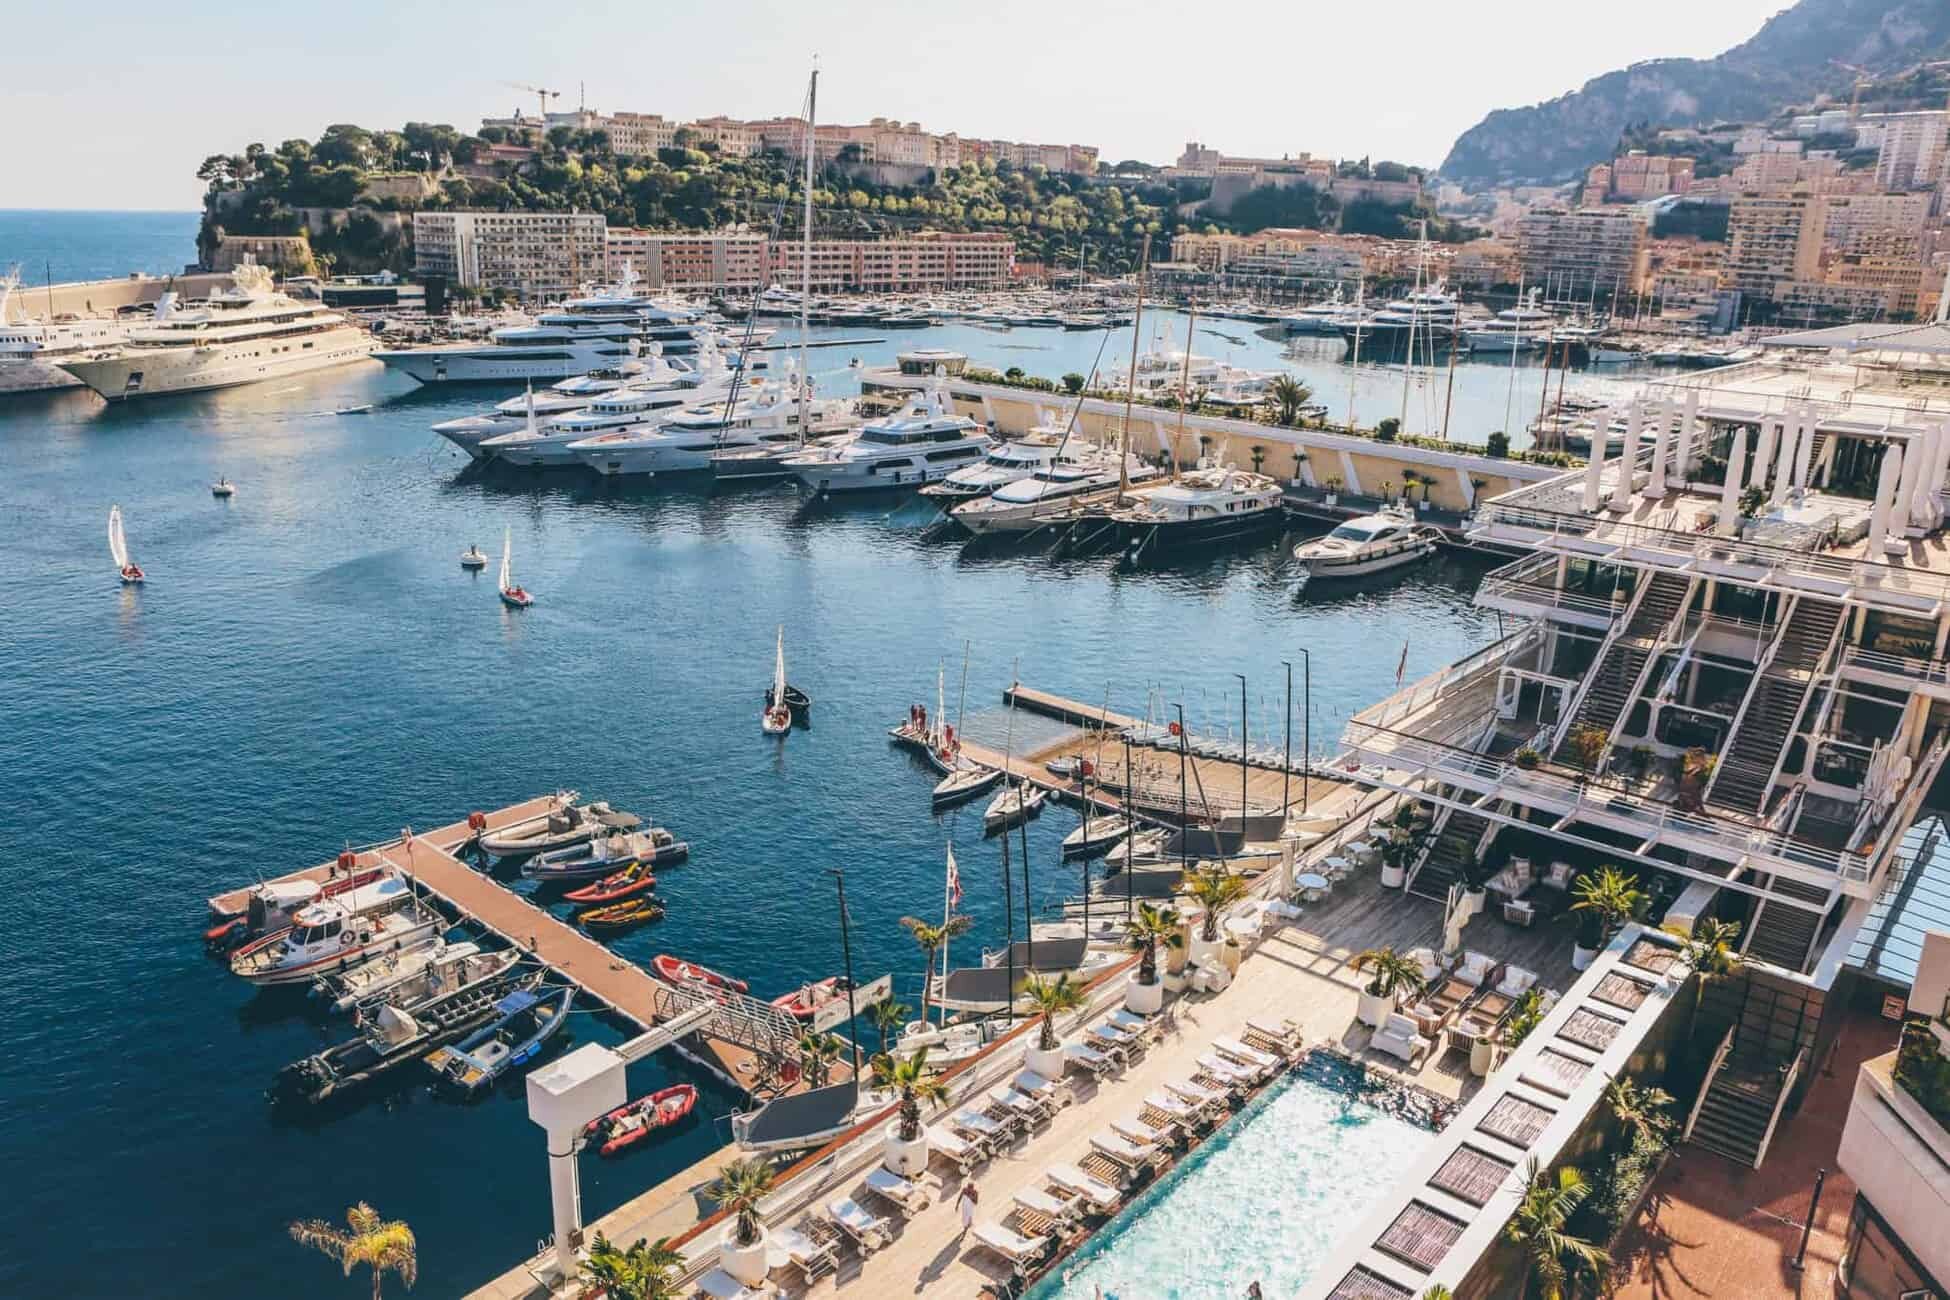 Monaco Marina is a yachting hub for getting a yacht job